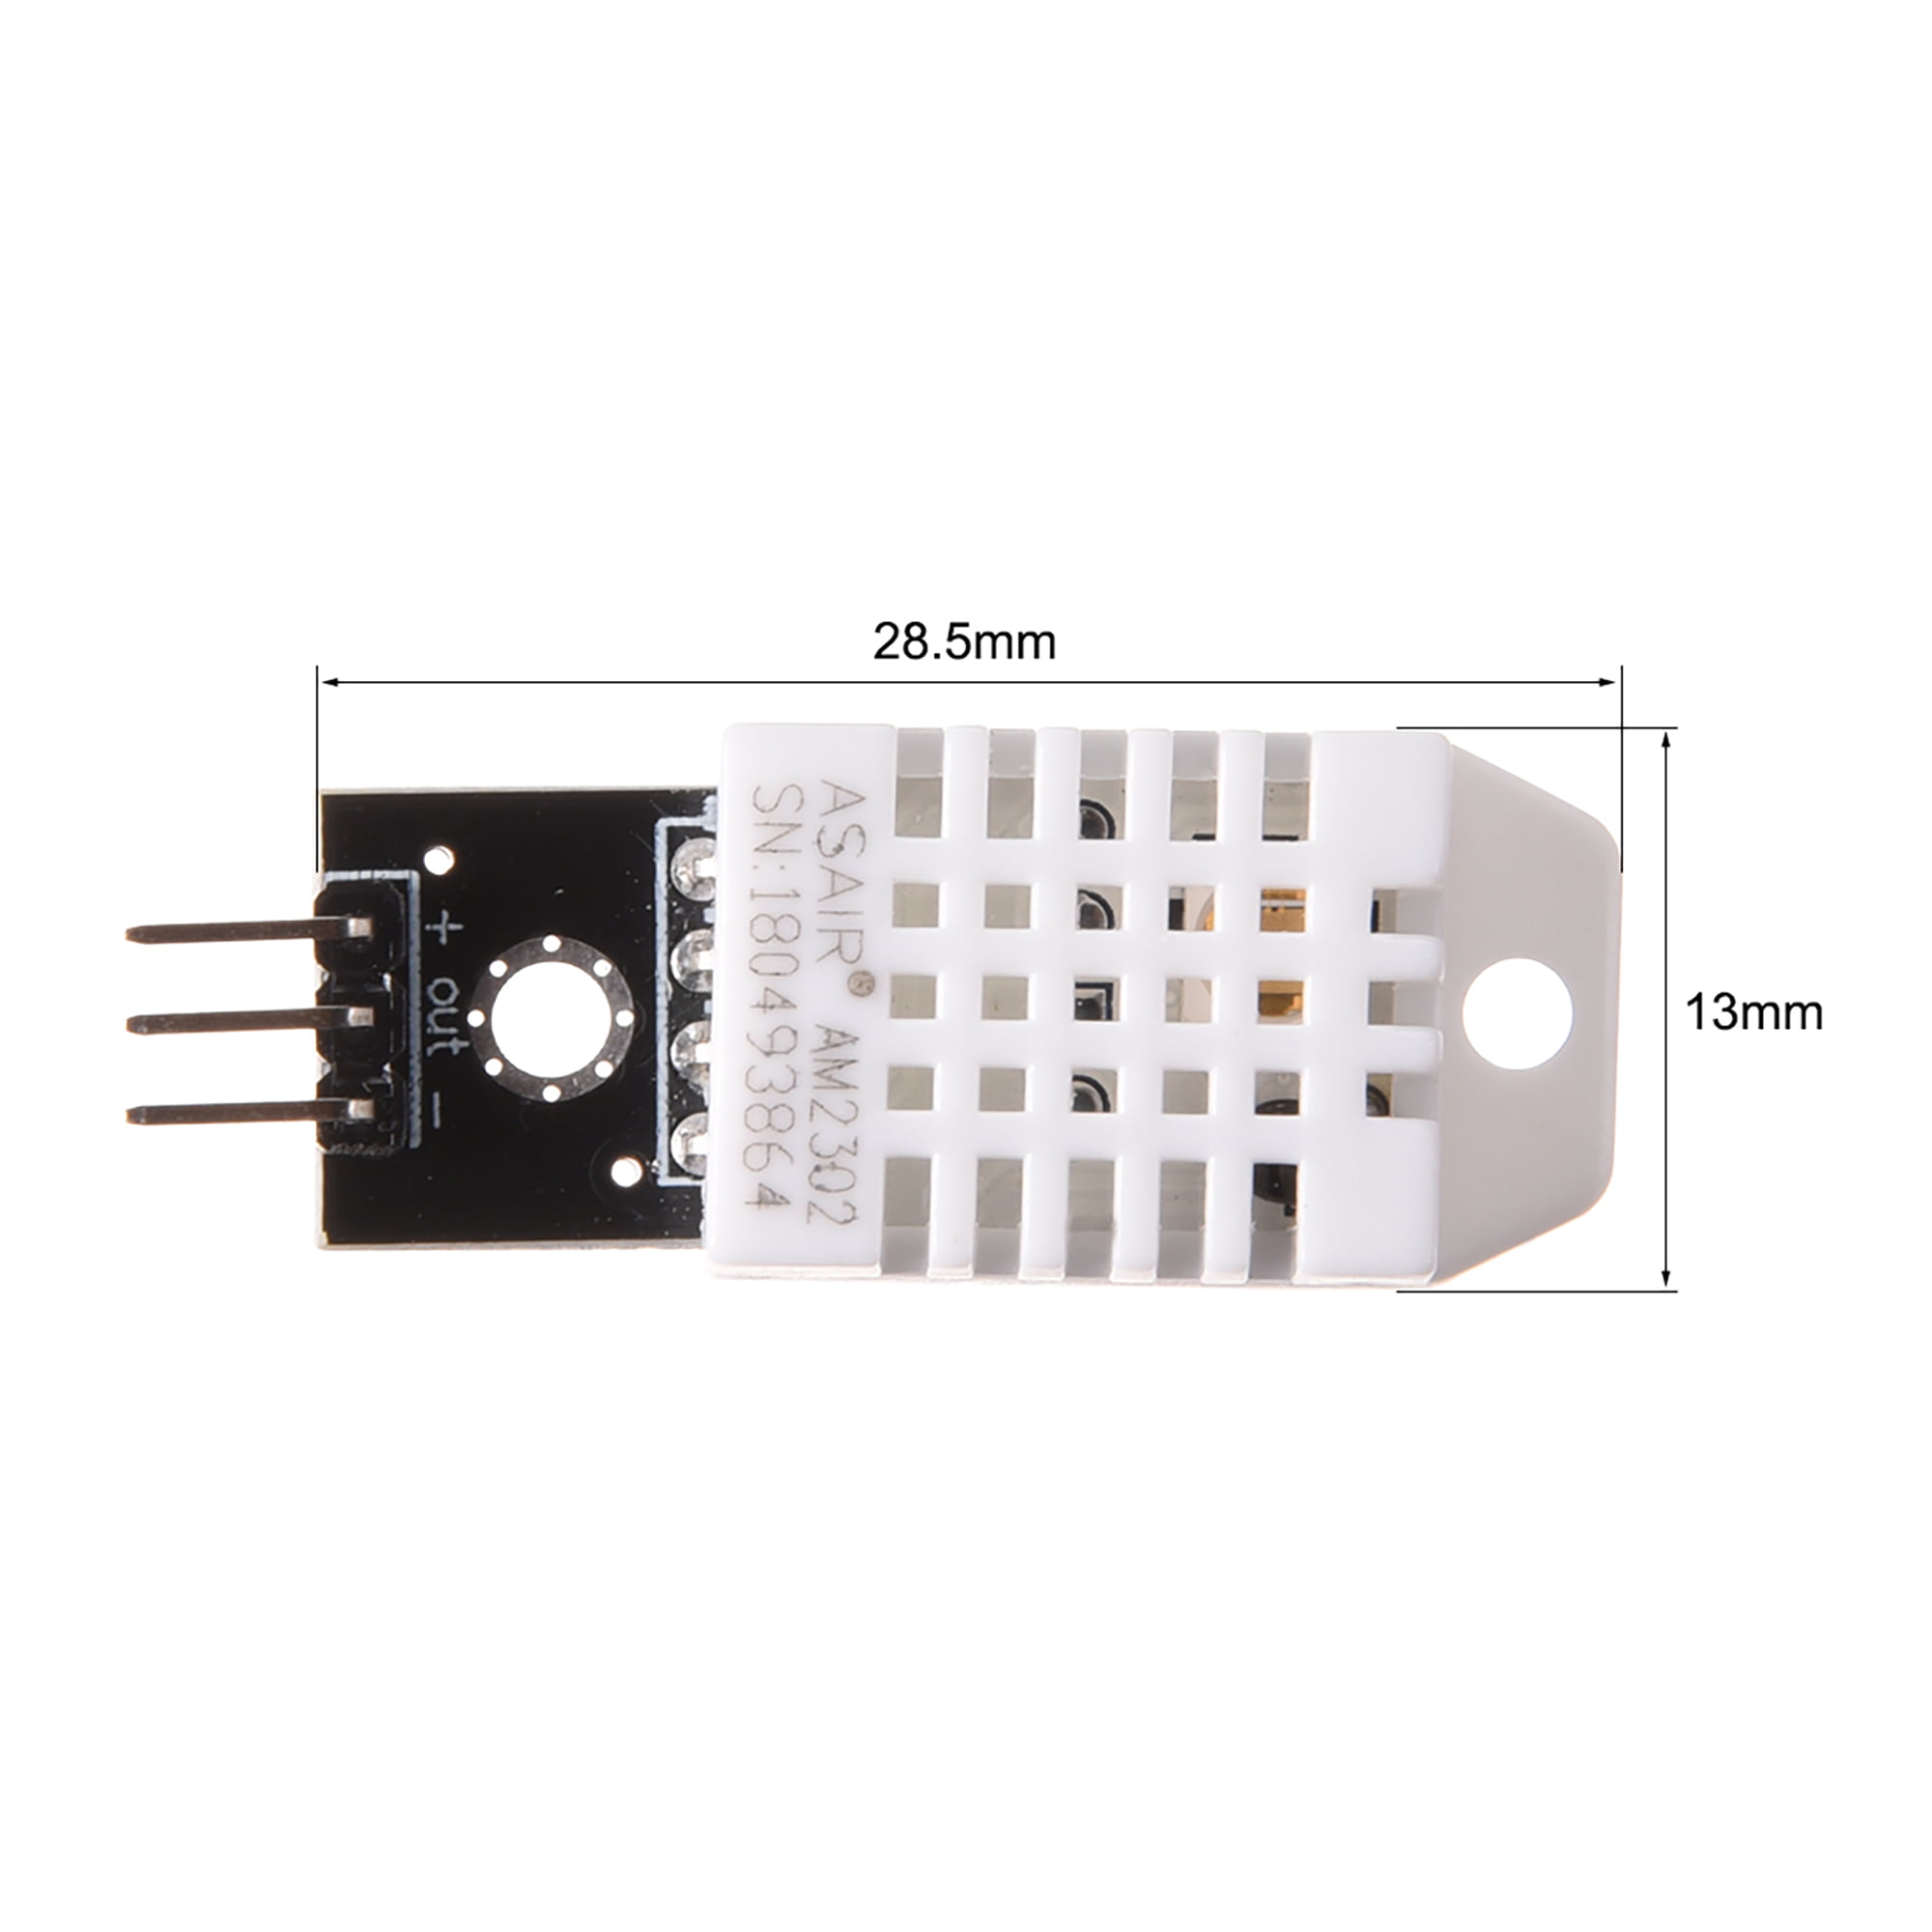 DHT22/AM2302 Digital Temperature and Humidity Measure Sensor Module for Arduino